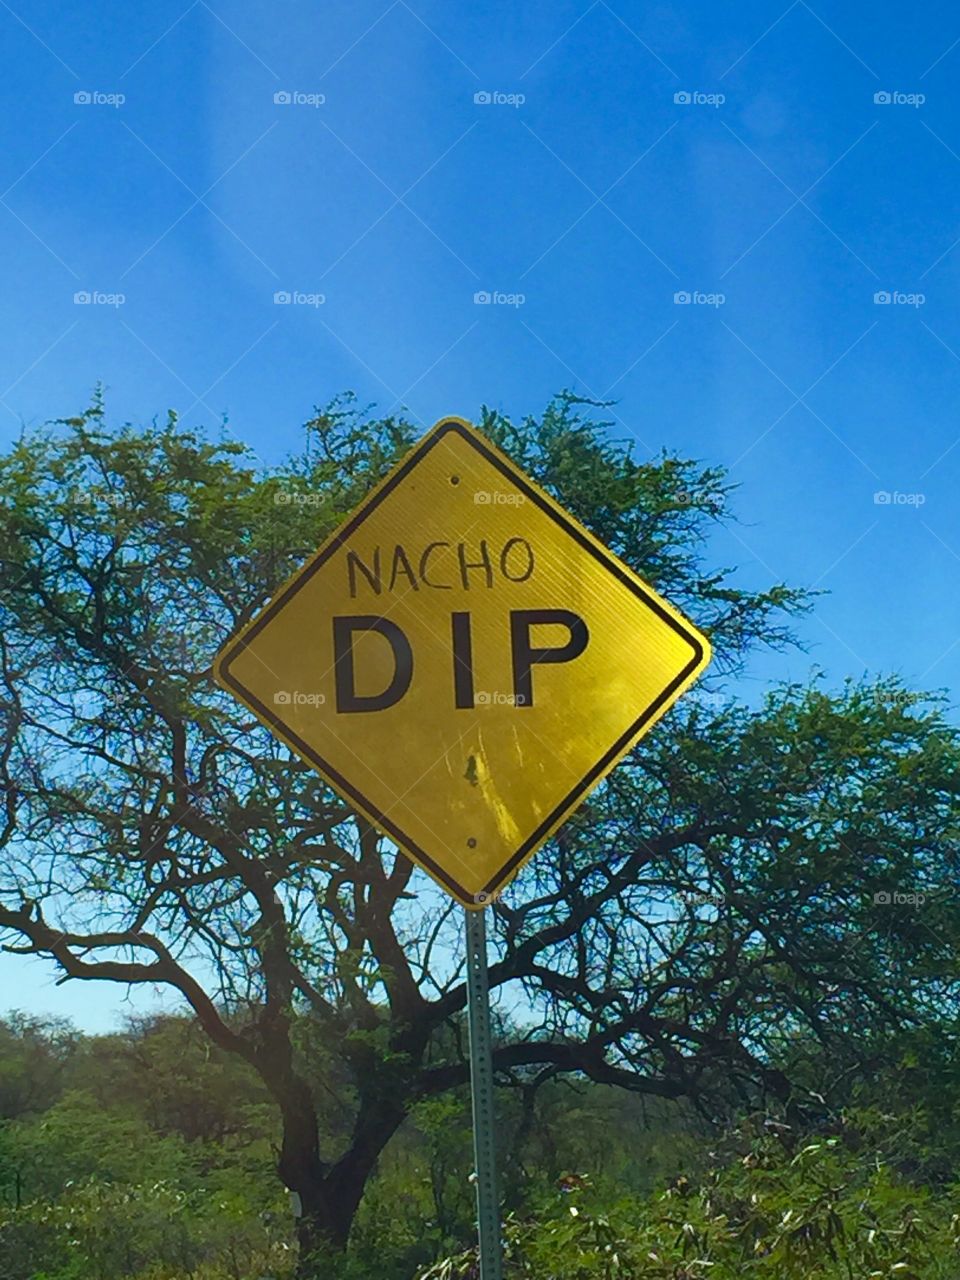 Nacho dip sign